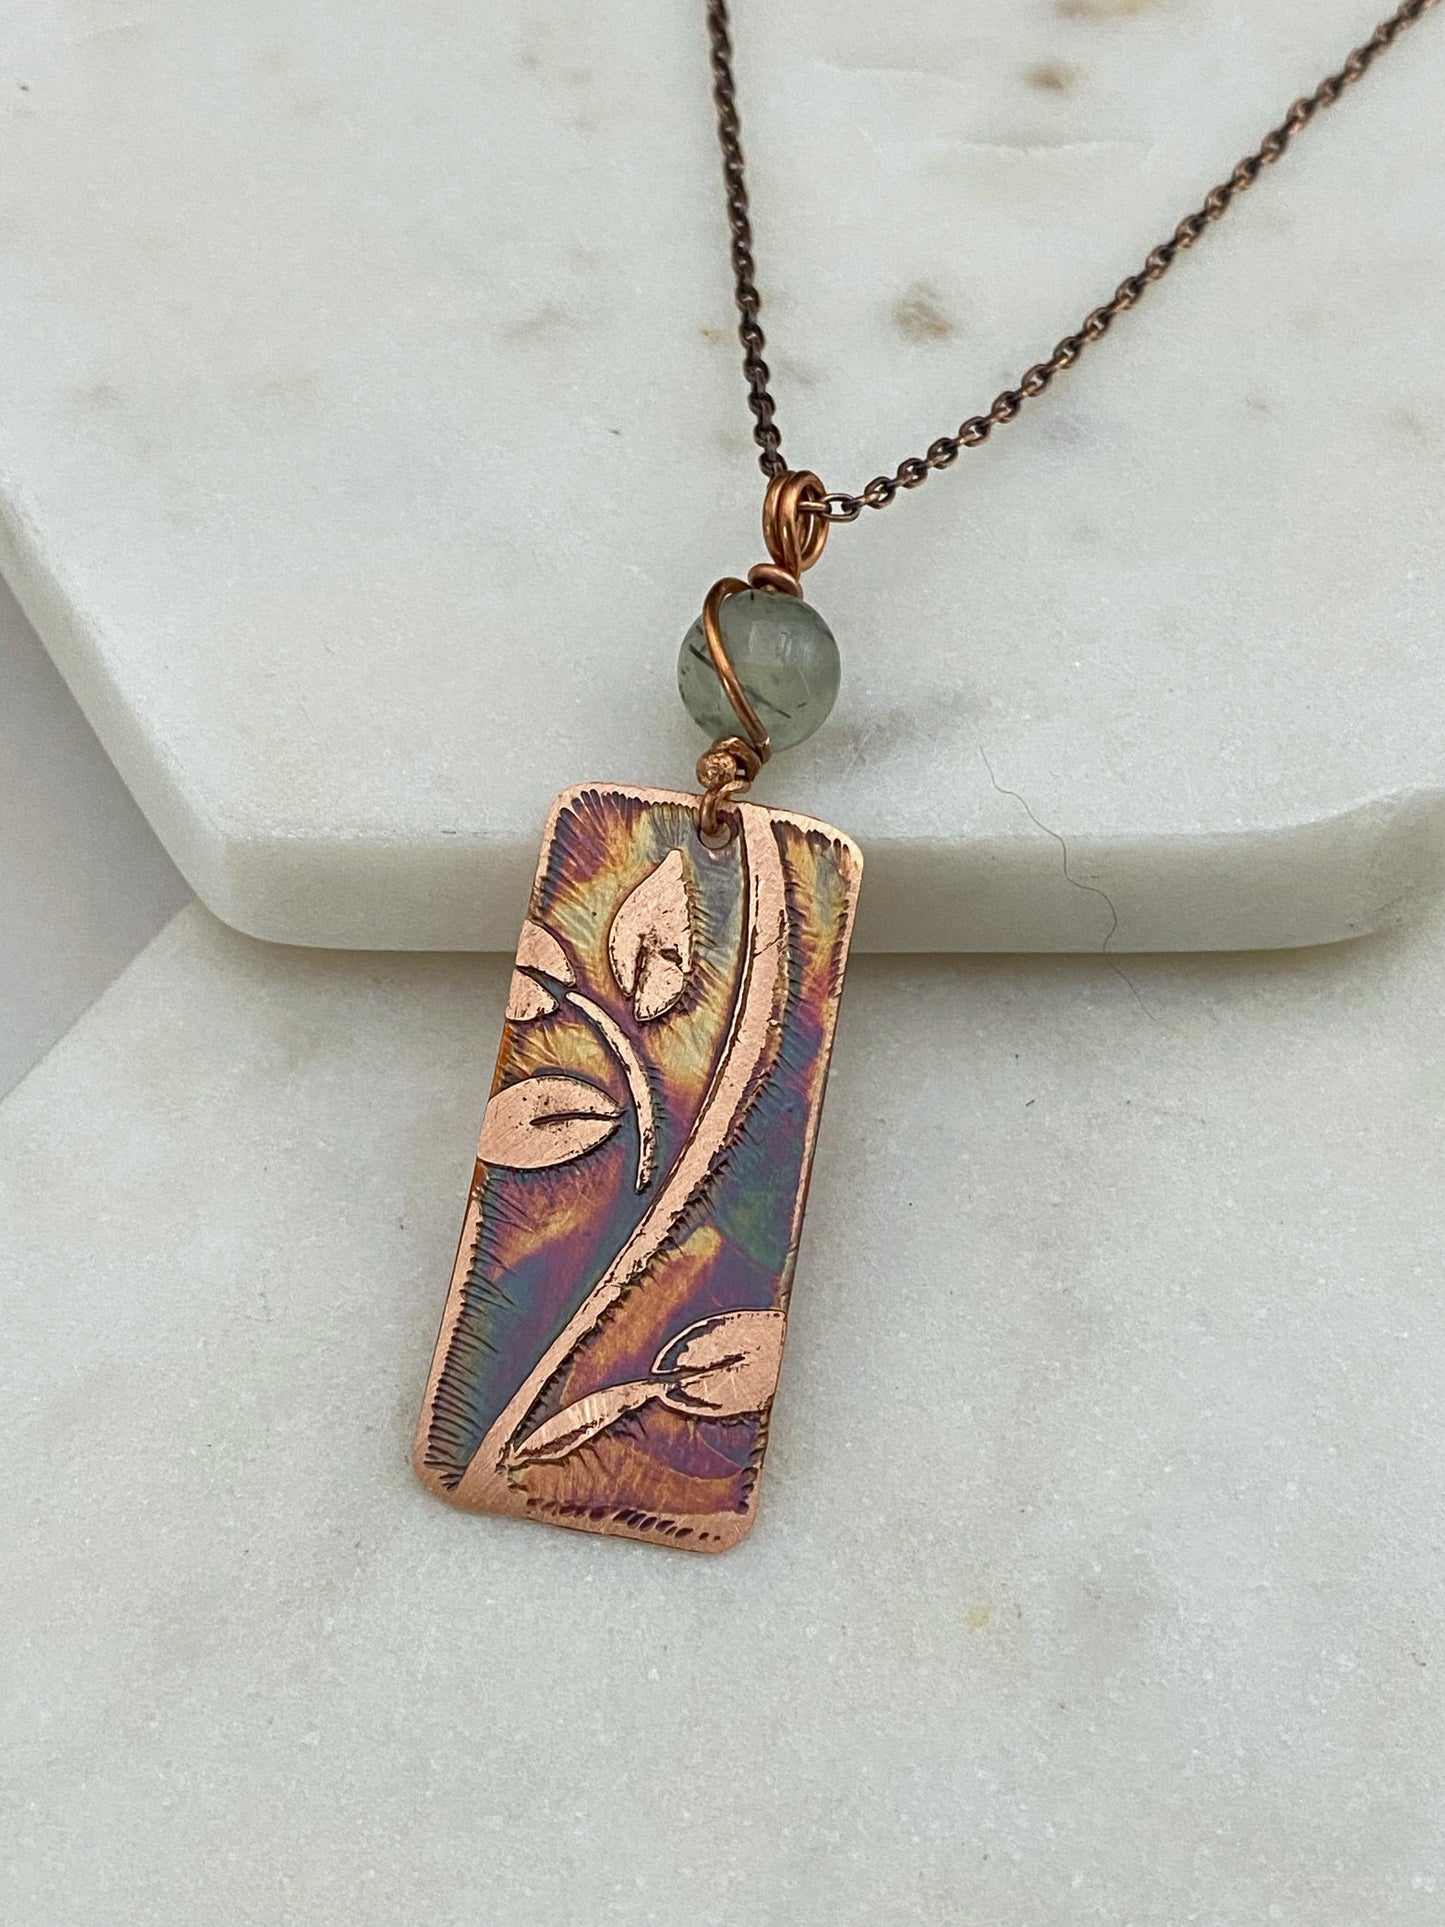 Acid etched copper leaf necklace with prehnite gemstone